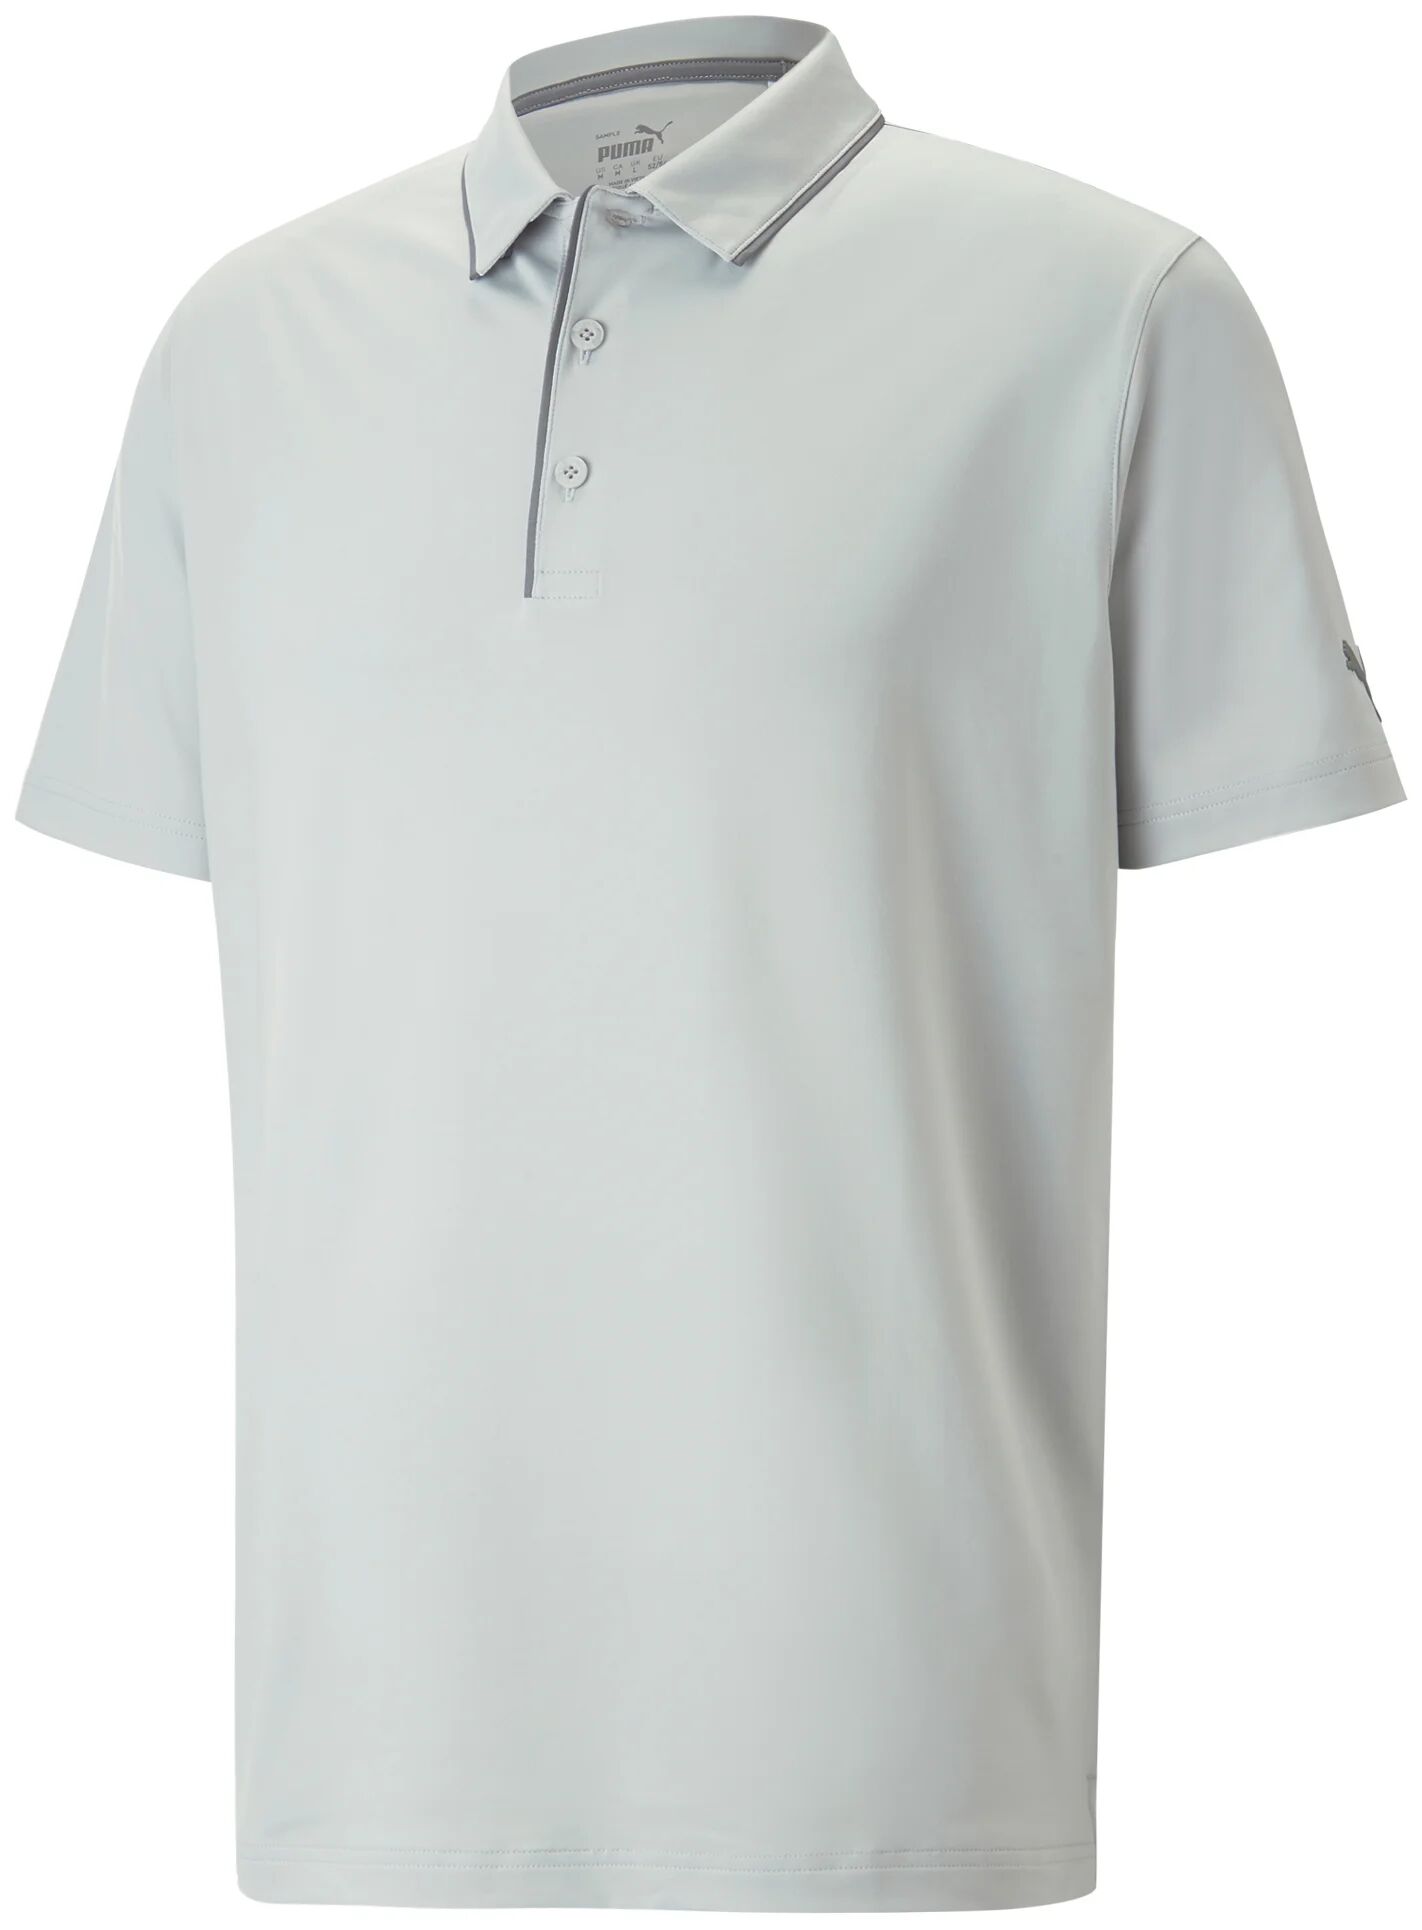 Puma MATTR Bridges Men's Golf Polo Shirt - Grey, Size: Large